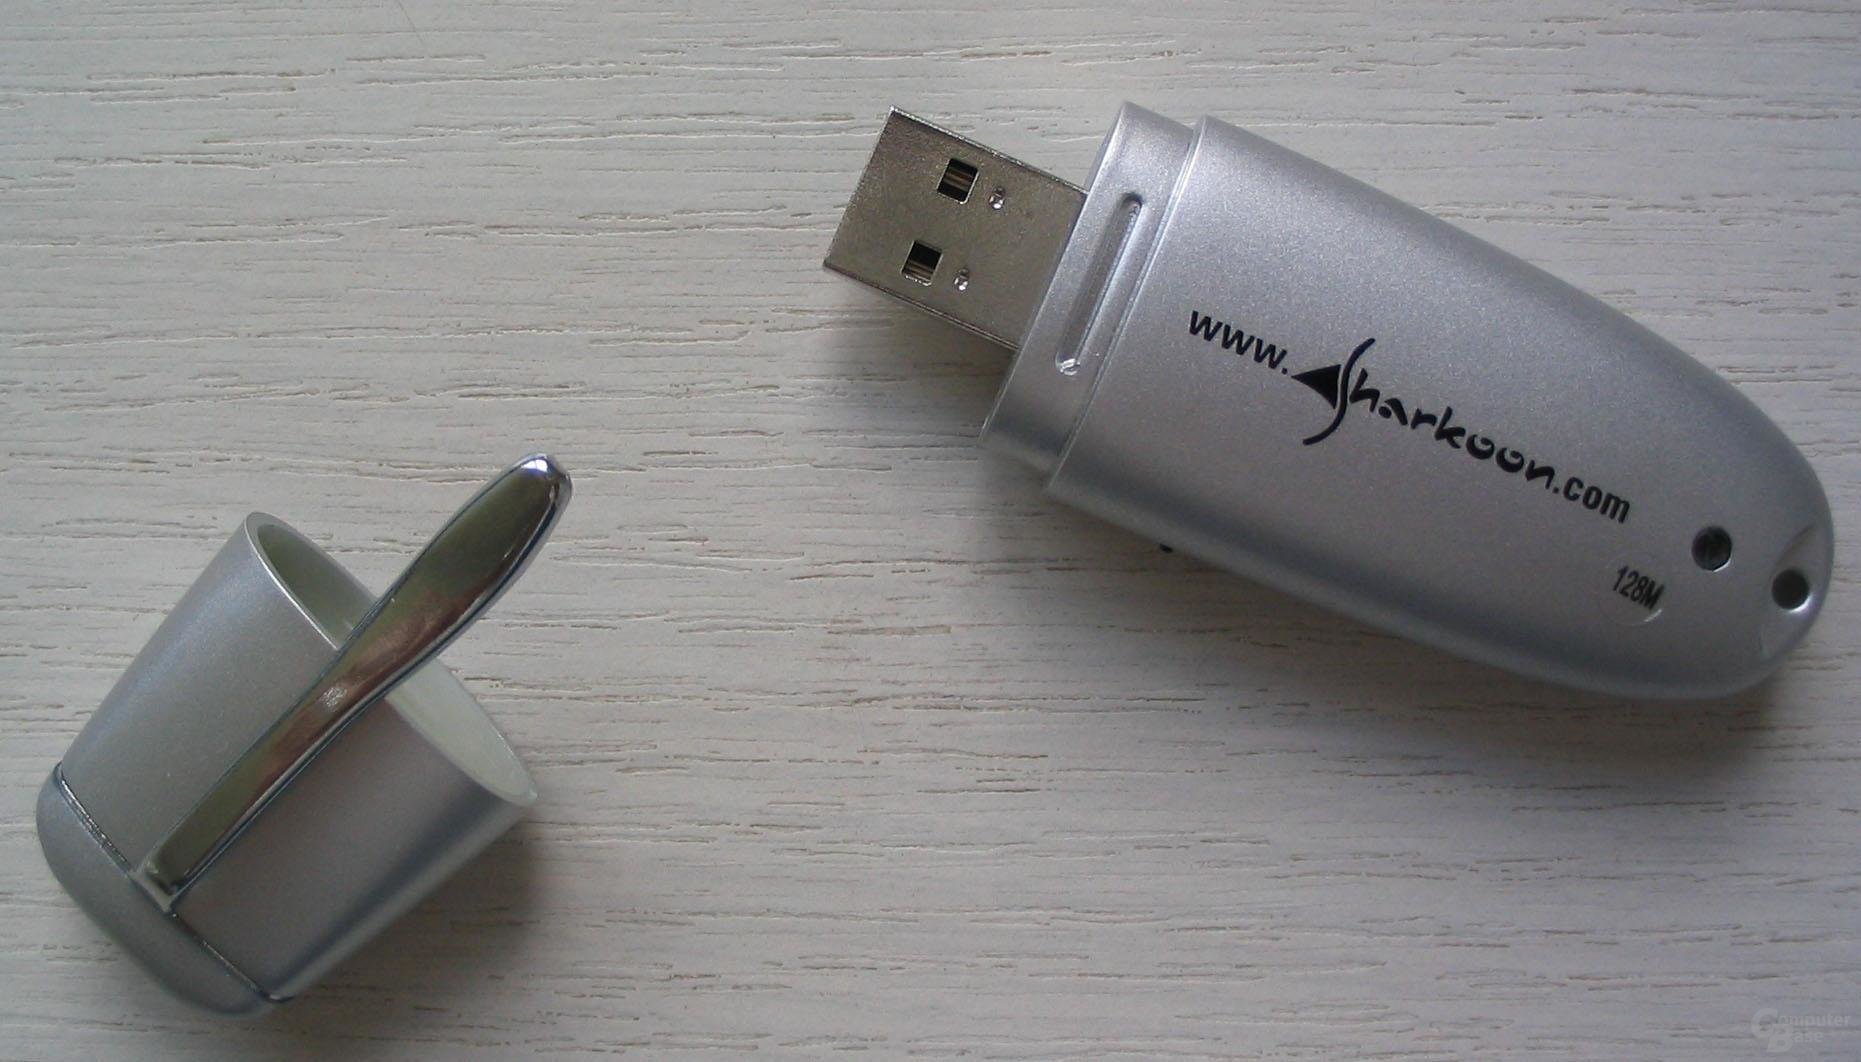 Sharkoon USB 2.0 Stick